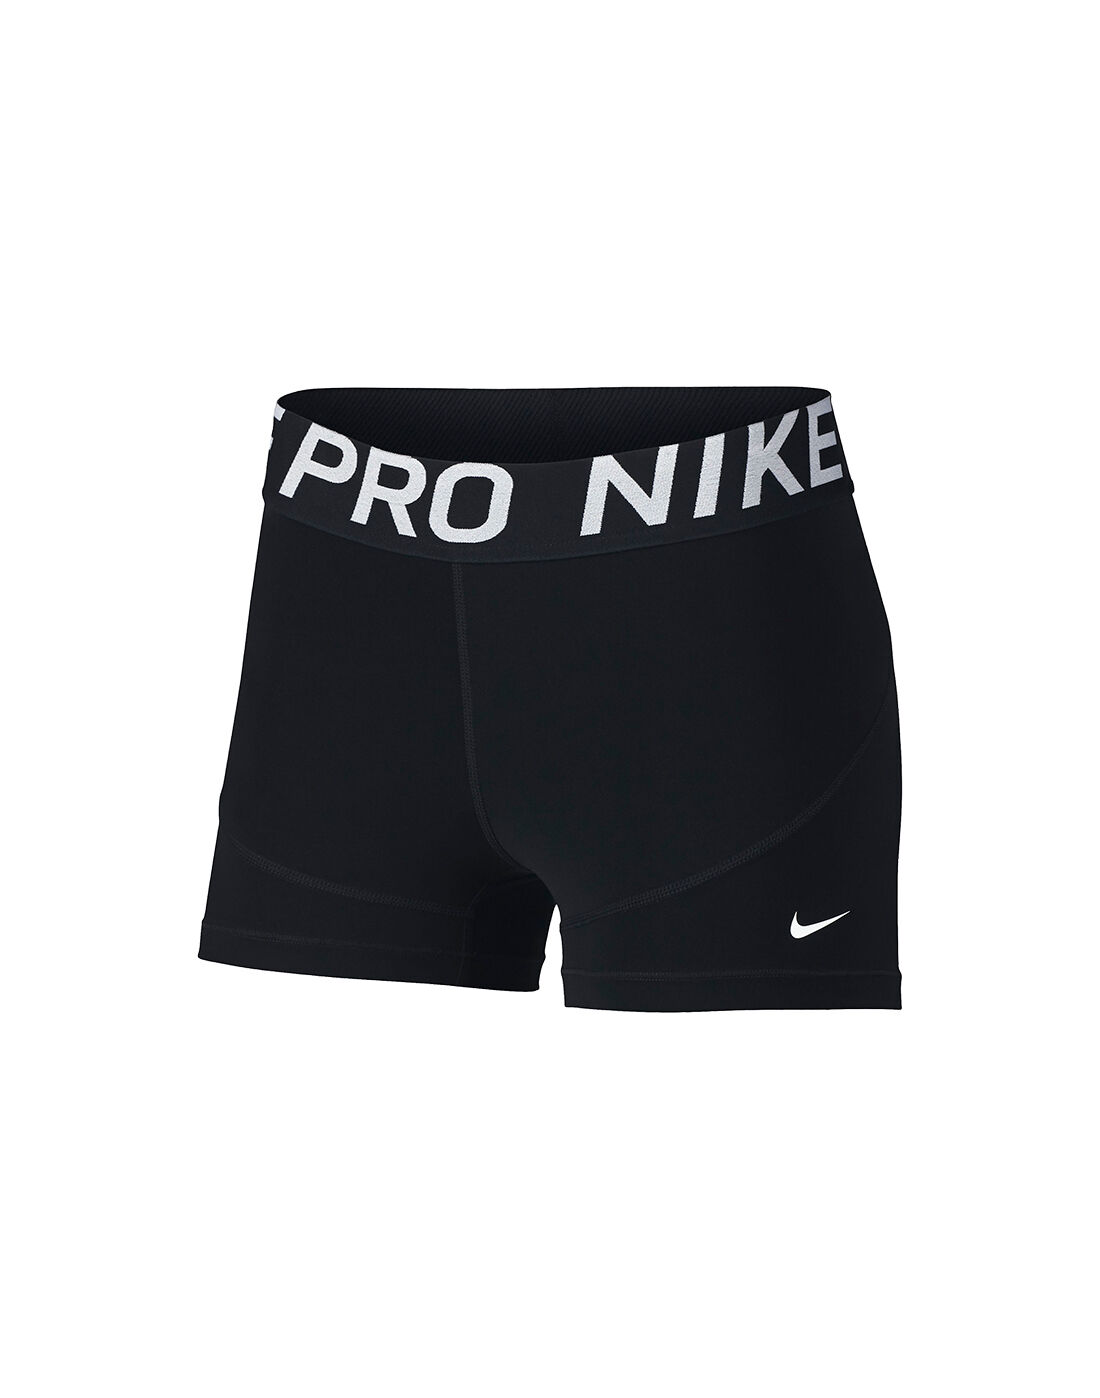 nike pro tight shorts